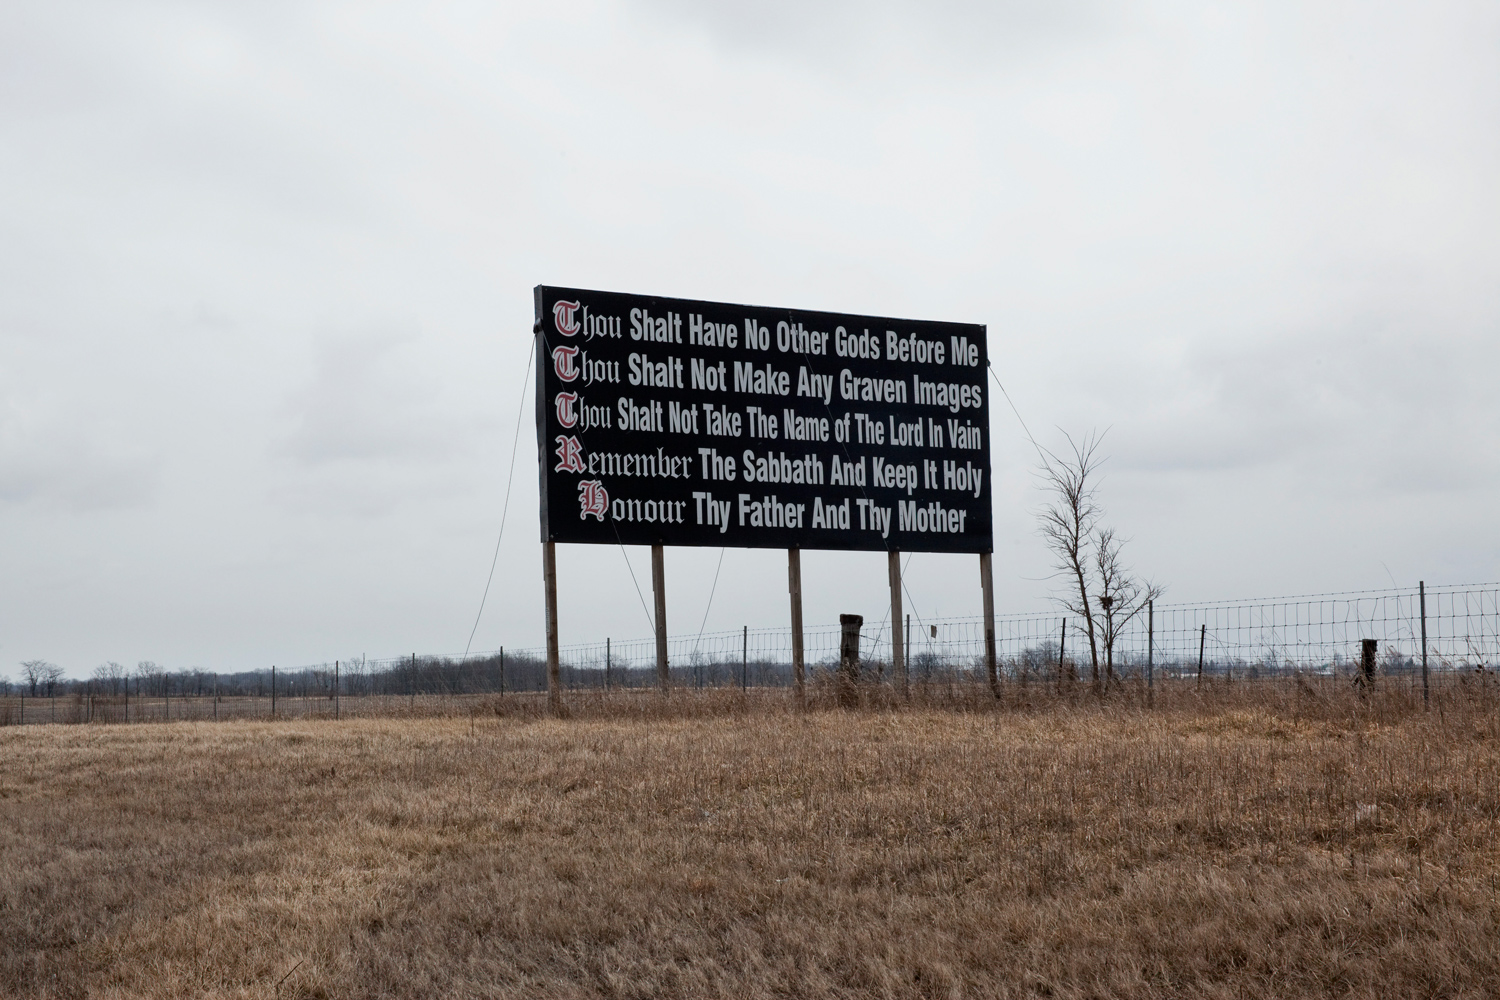 March 4, 2012. Billboard on I-71 highway in Ohio.